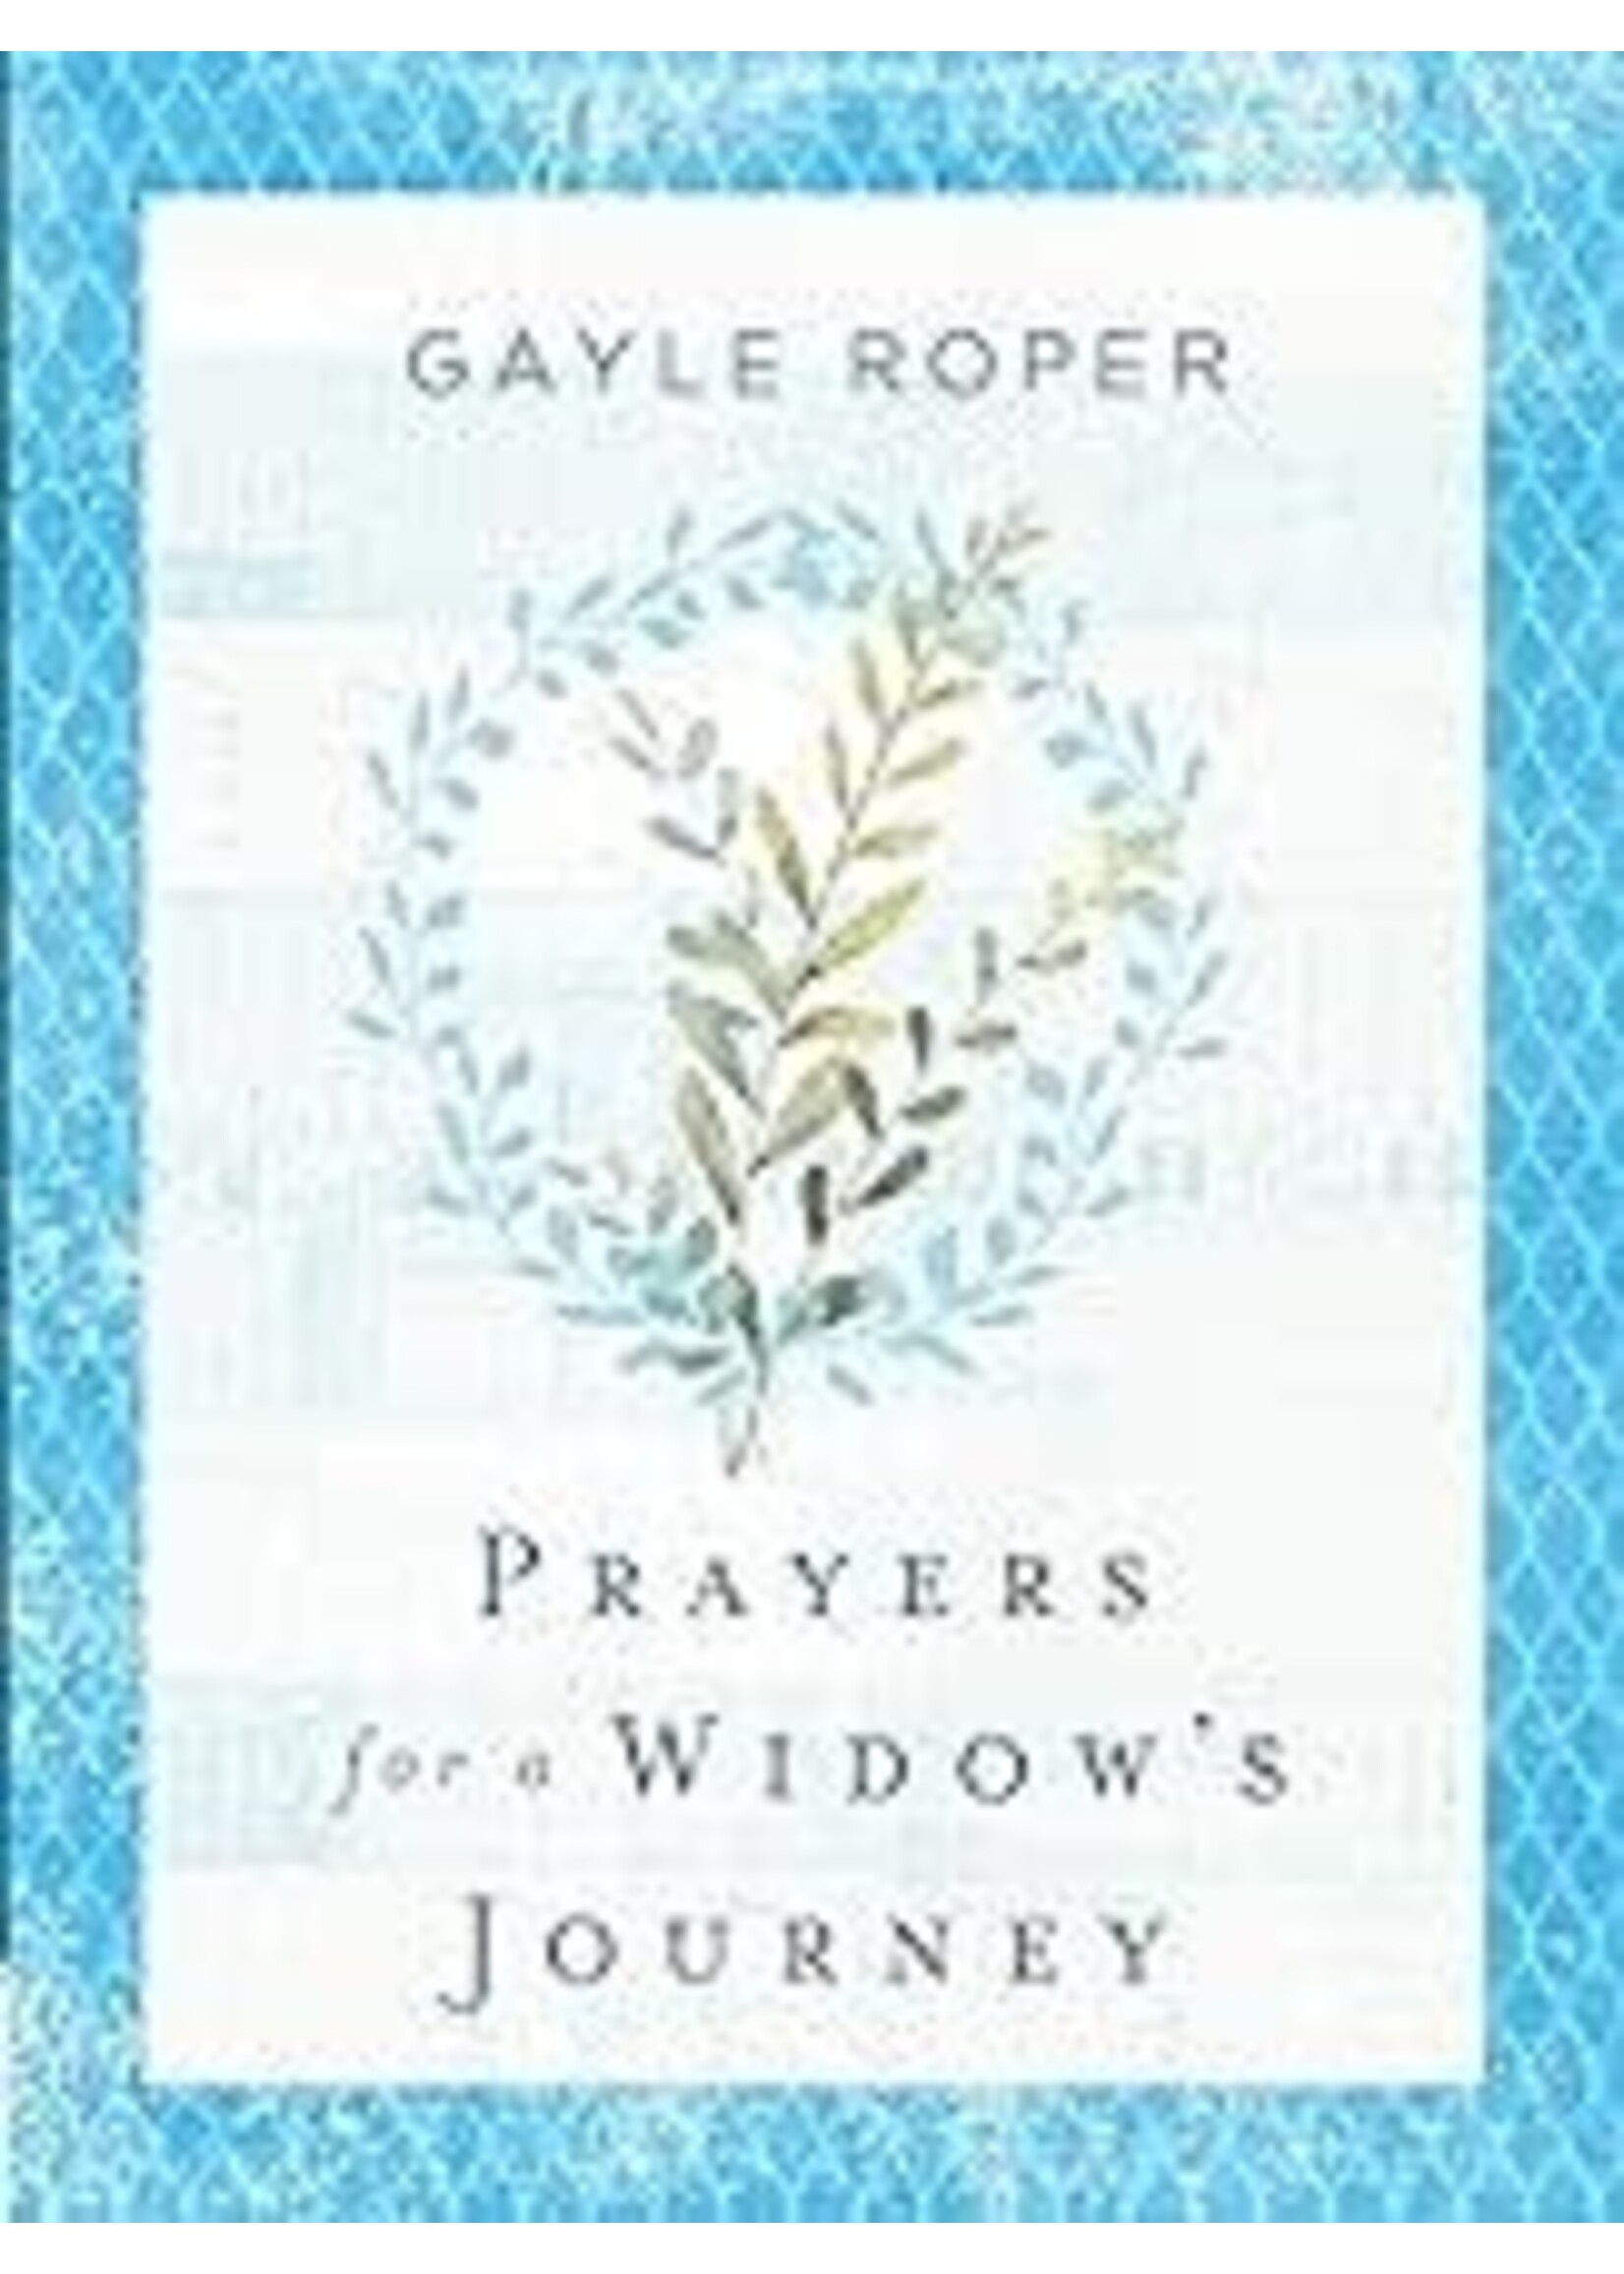 Prayers For A Widow's Journey